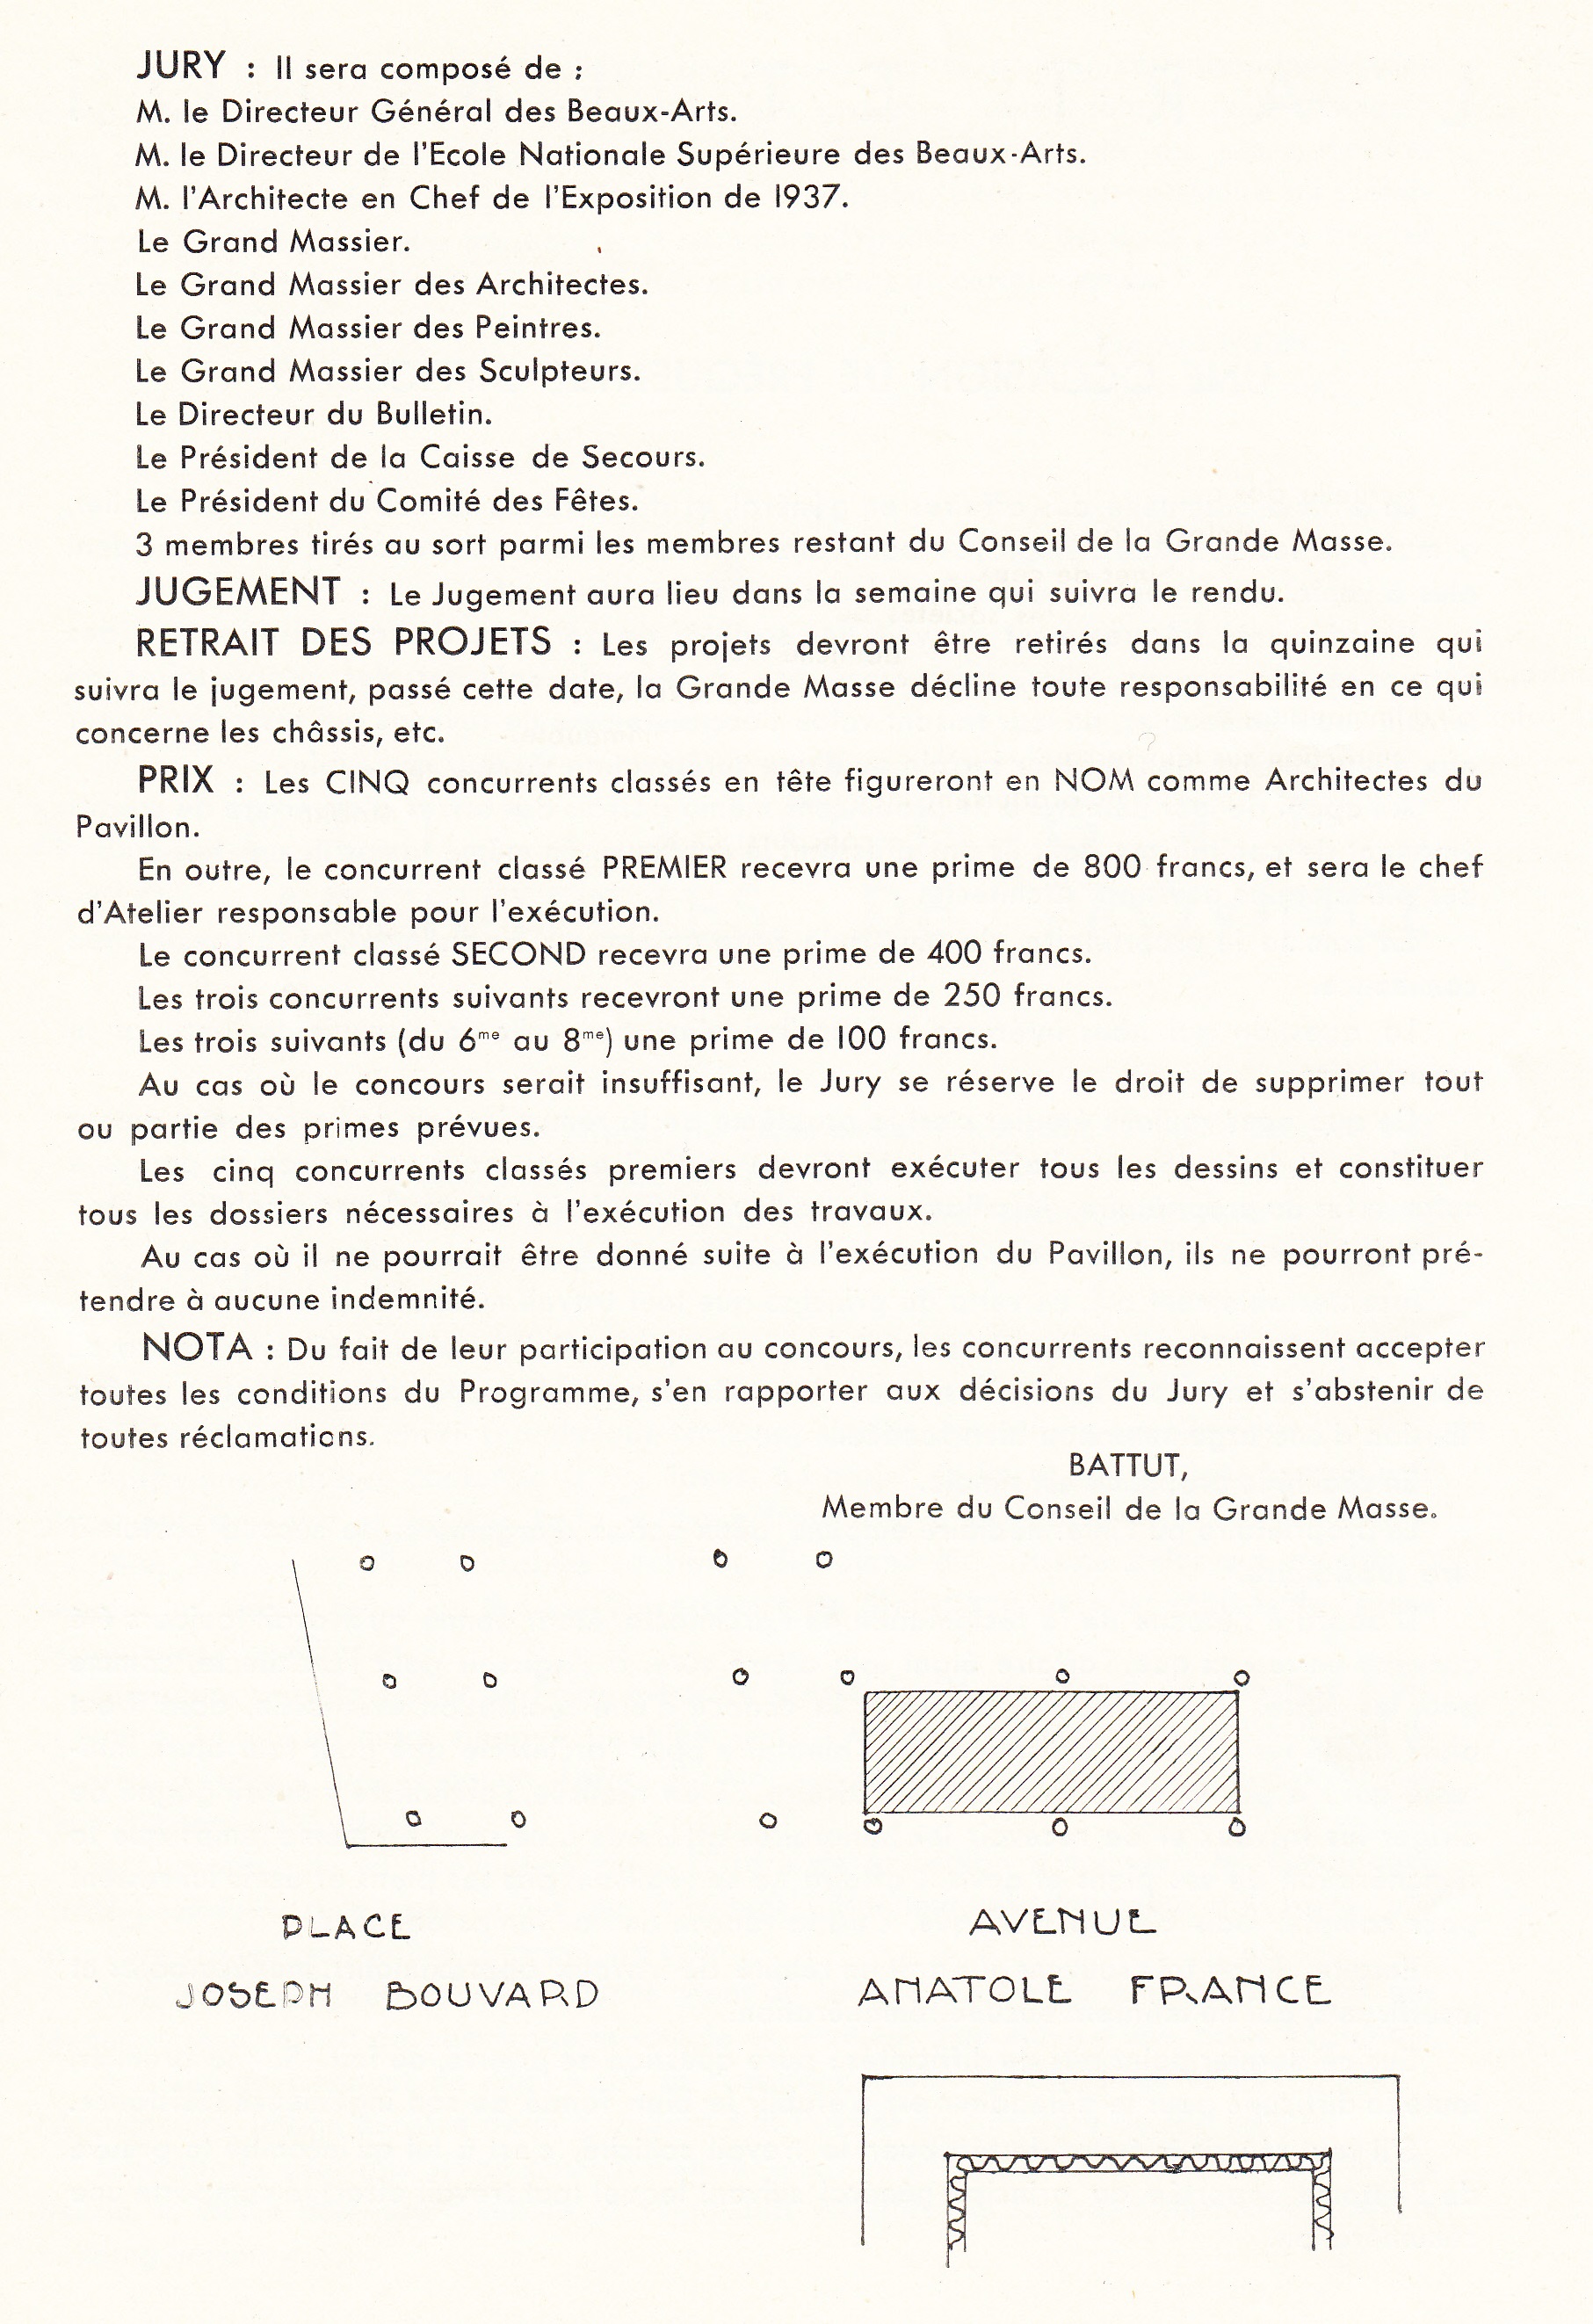 BULLETIN-GMBA_193610_Reglement-Concours_Partie-2.jpg